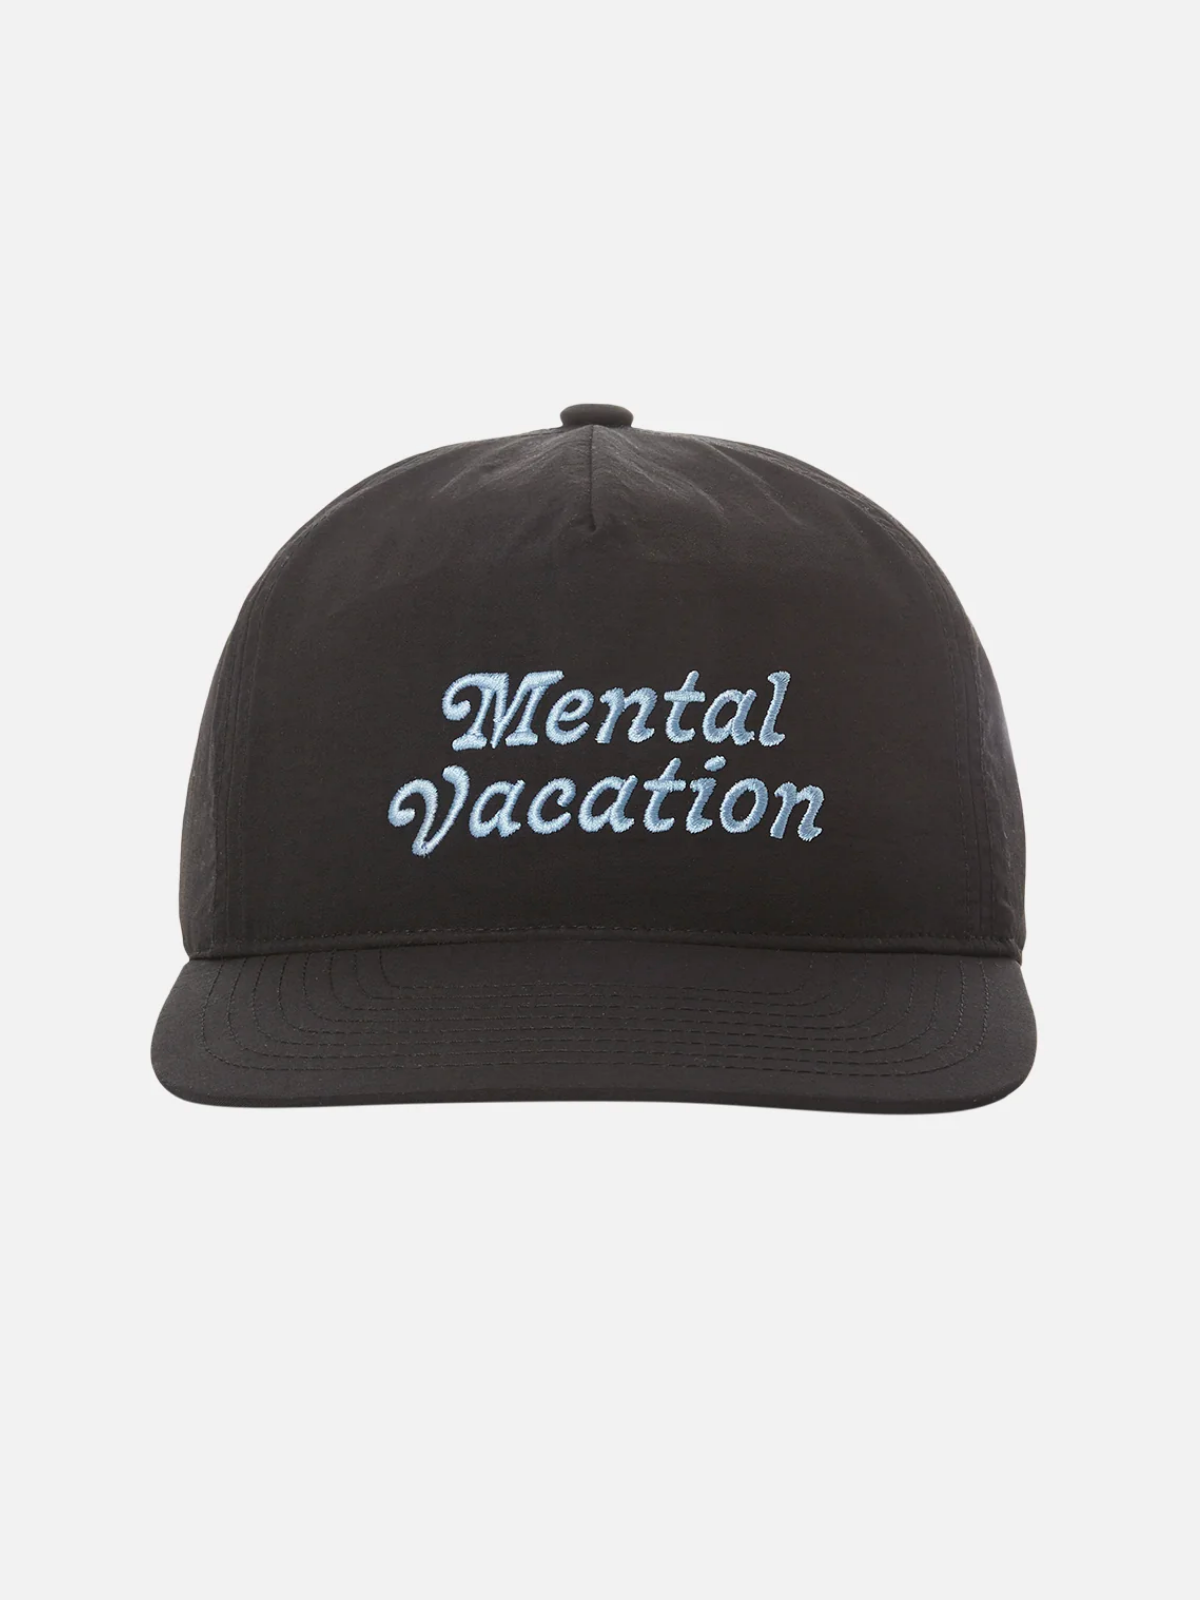 katin mental vacation hat nylon black baby blue embroidered snapback cap kempt athens ga georgia men's clothing store